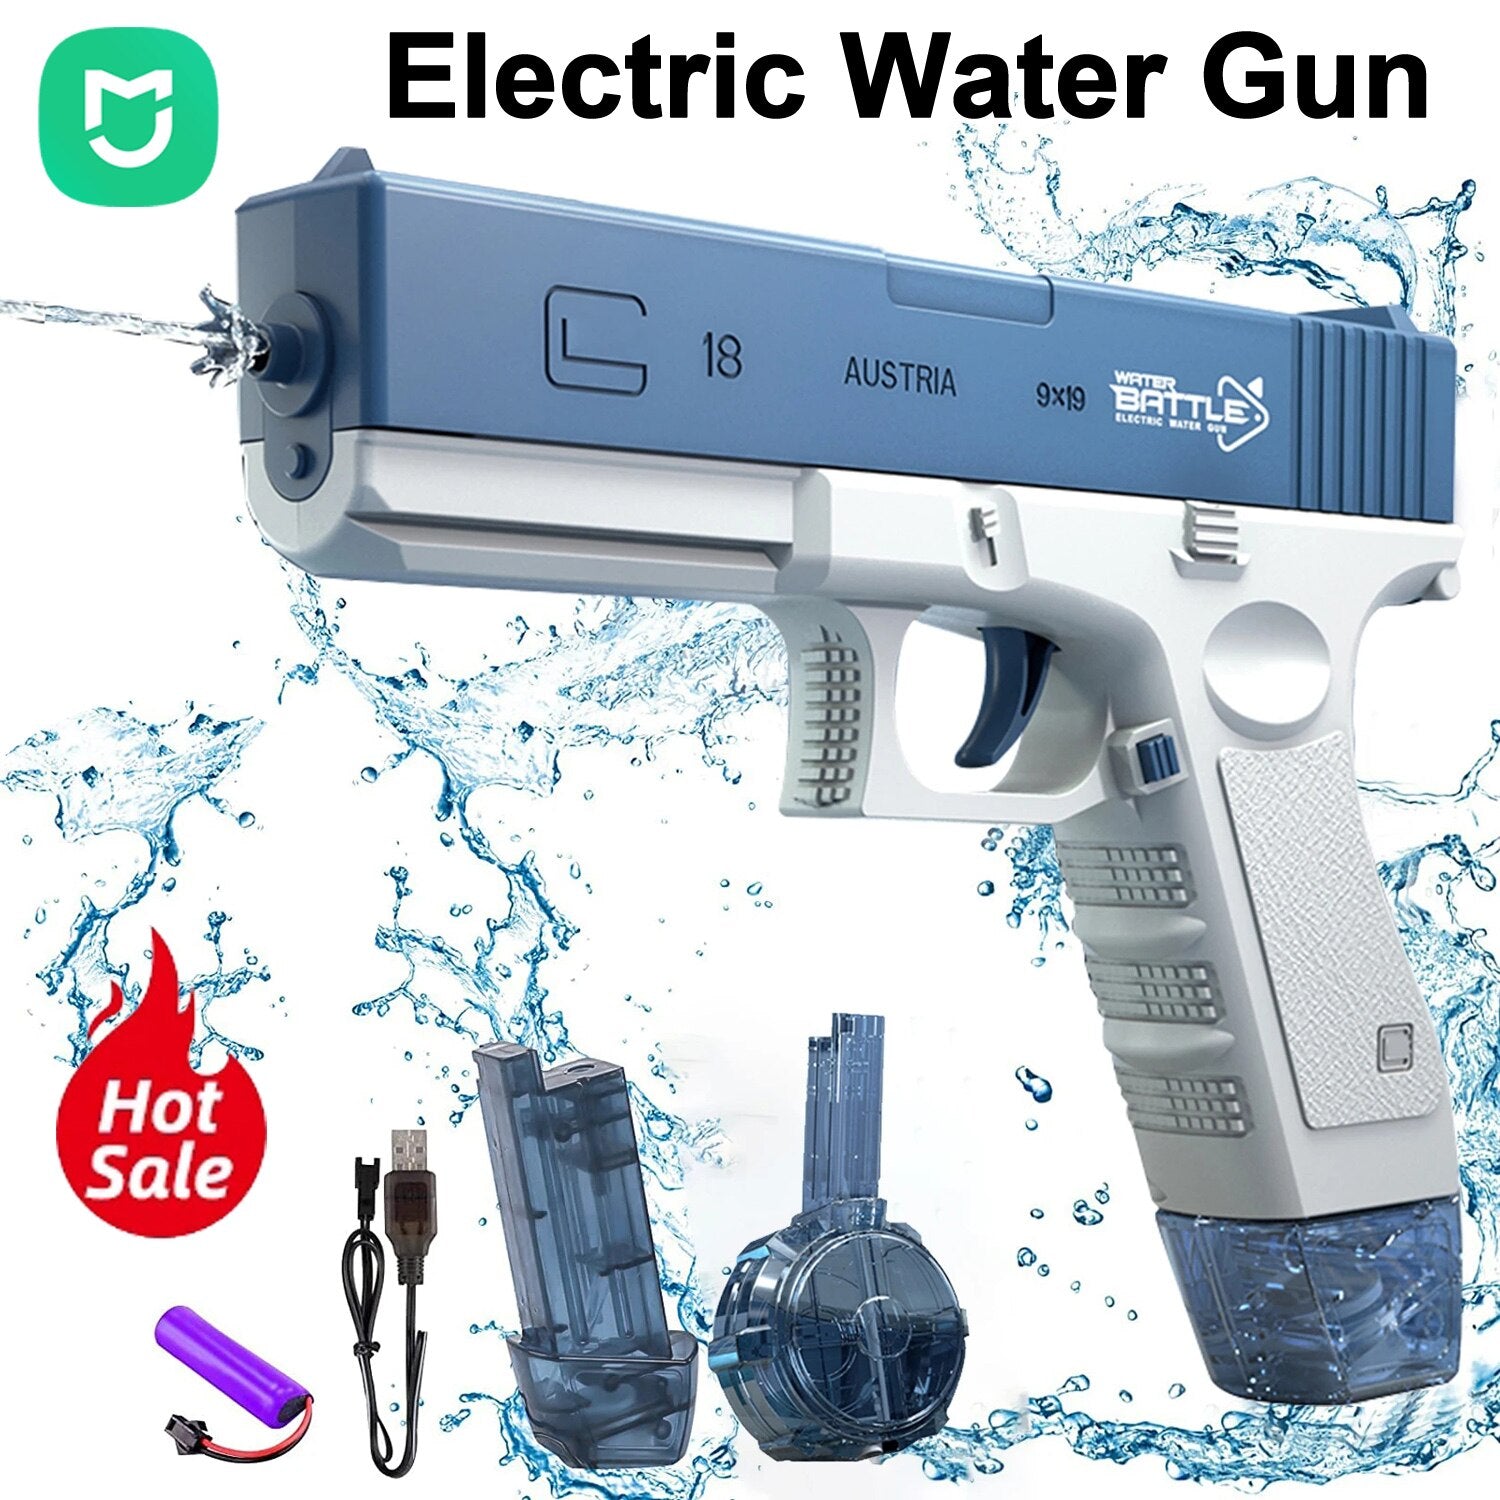 Xiaomi MIJIA Summer Water Gun Electric Glock Pistol High-pressure Full Automatic Shooting Water Beach Toy For Kids Children Boys